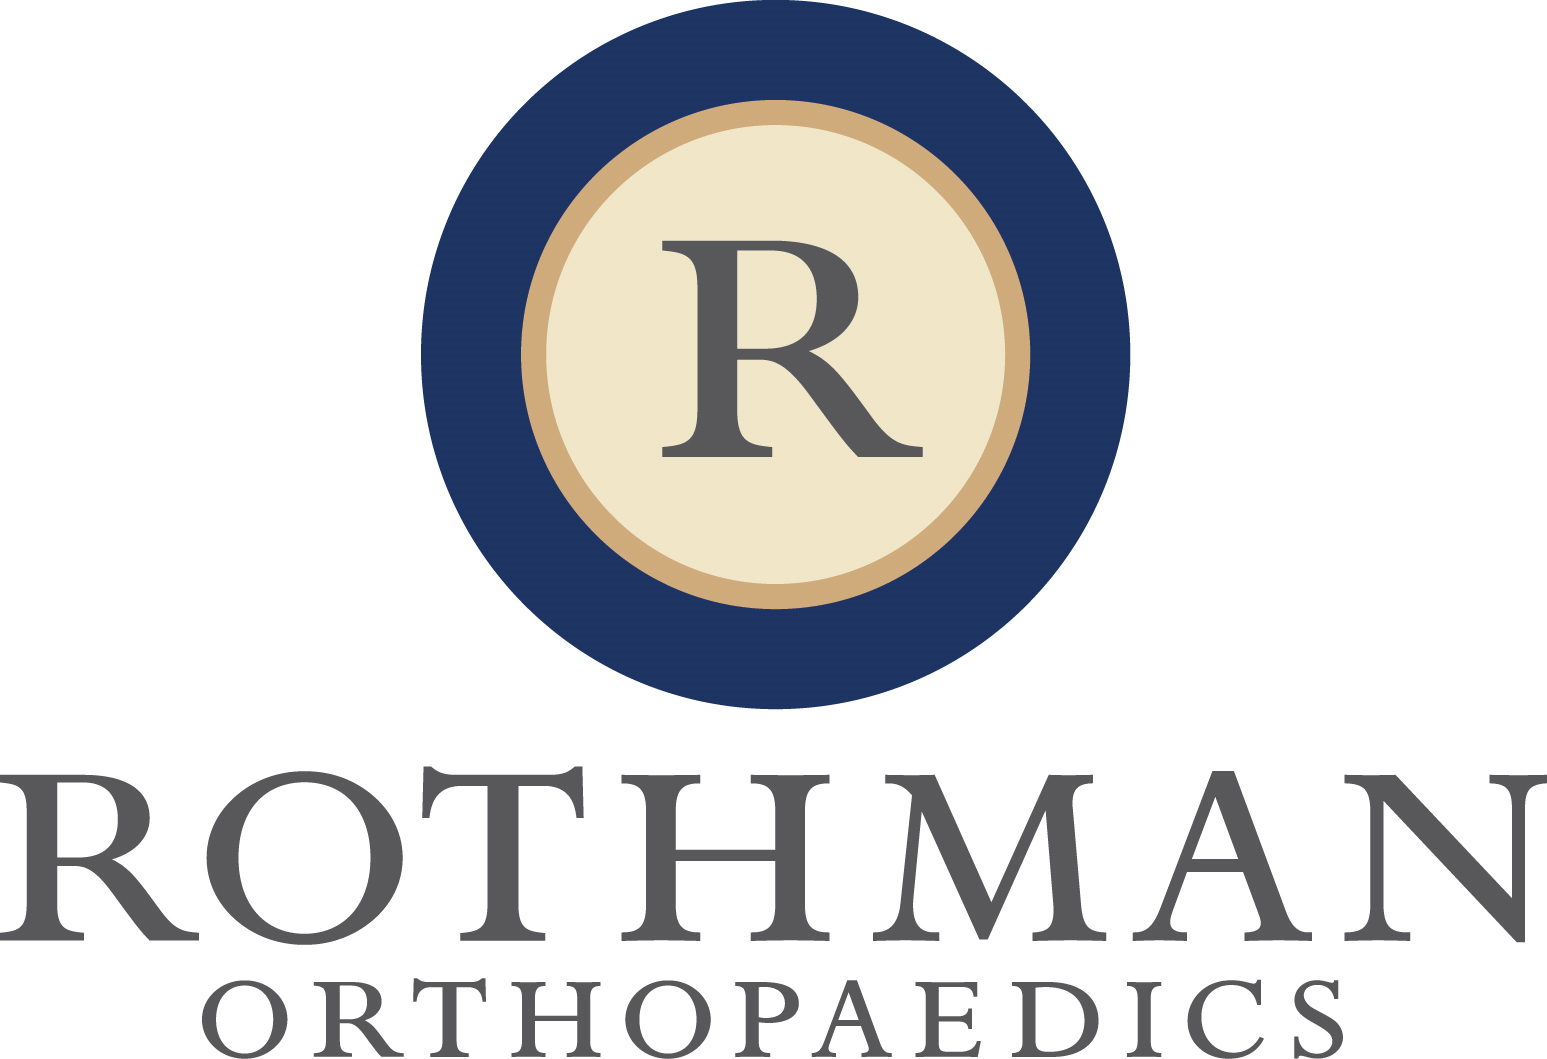 Rothman Orthopaedics logo